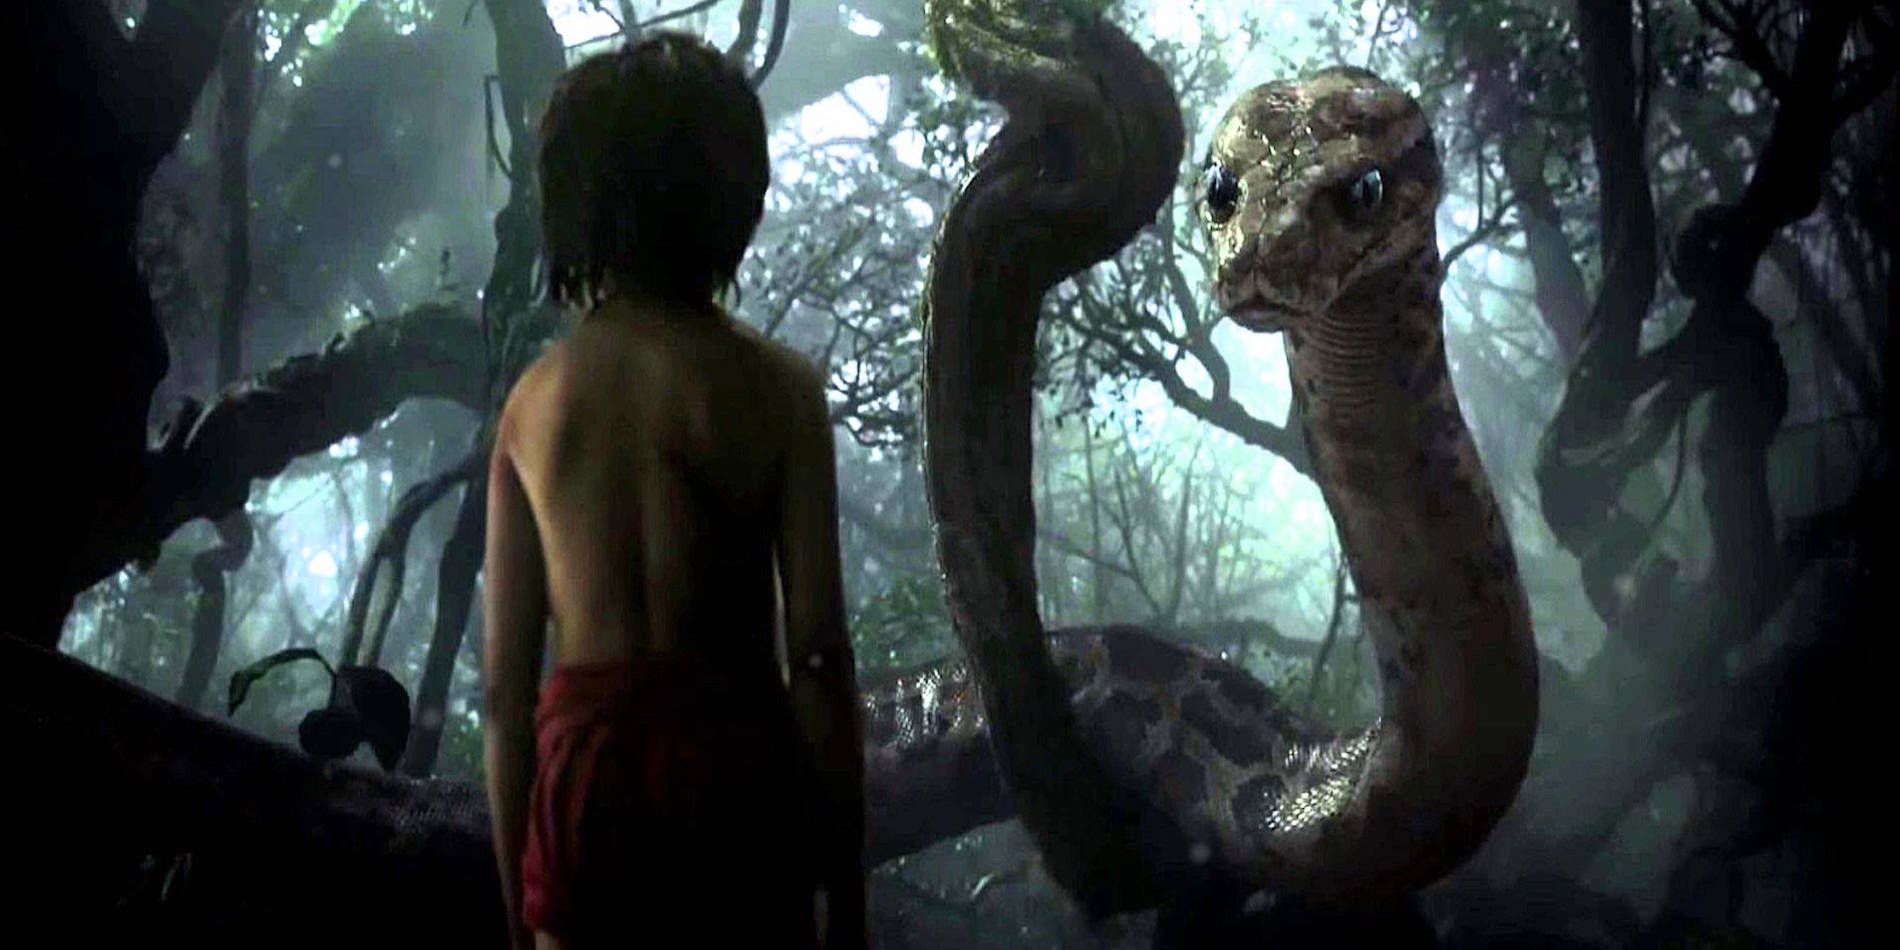 Scarlett Johansson voices Raa in The Jungle Book